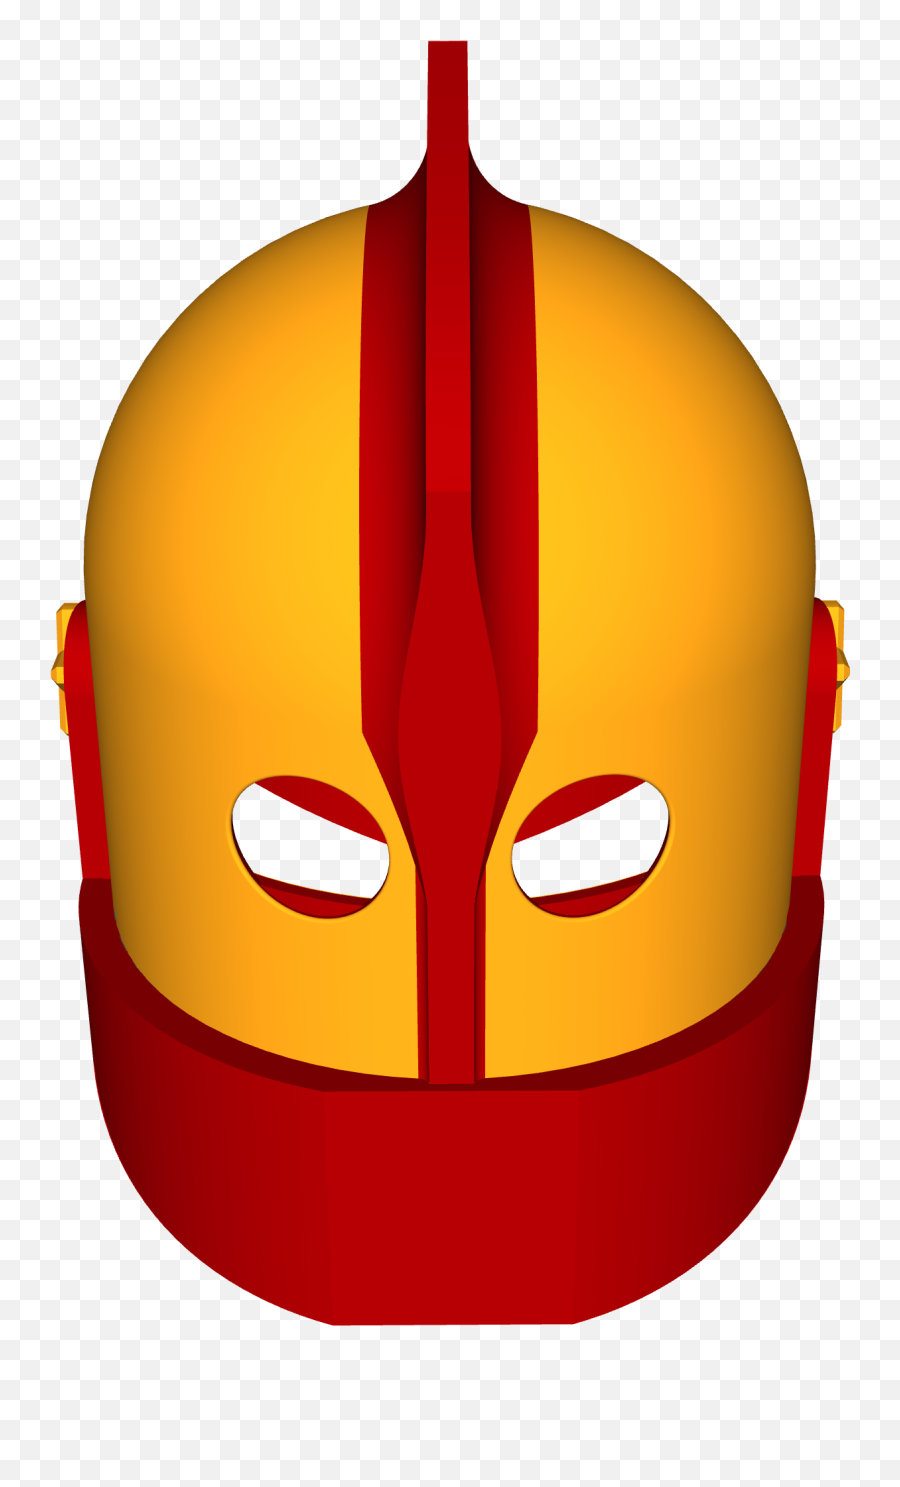 The Real Iron Man Helmet By Drewbrewchan - Thingiverse Illustration Png,Iron Man Helmet Png